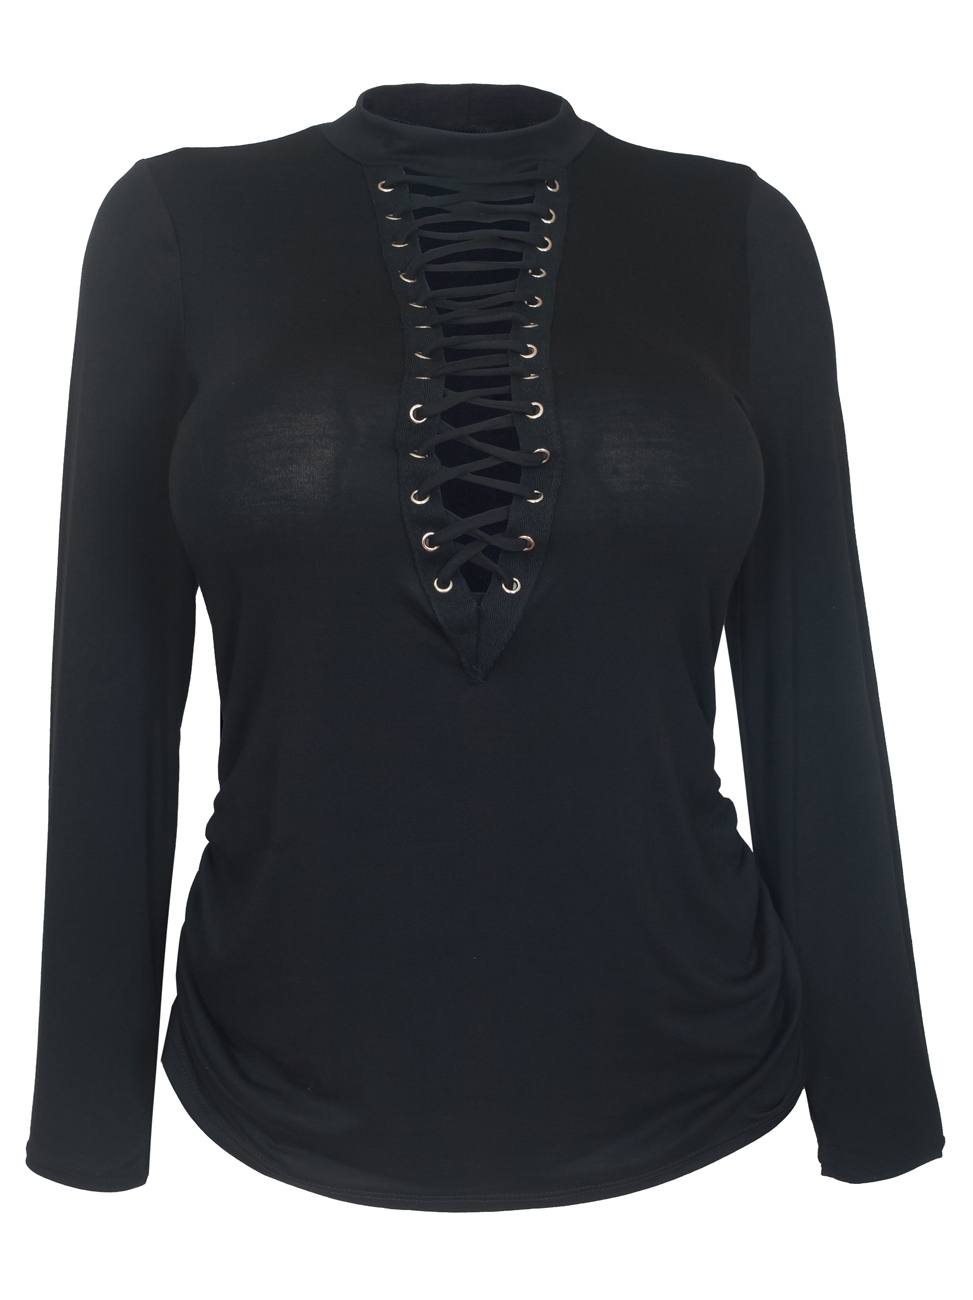 Women's Mock Neck Lace Up Long Sleeve Top Black | eVogues Apparel